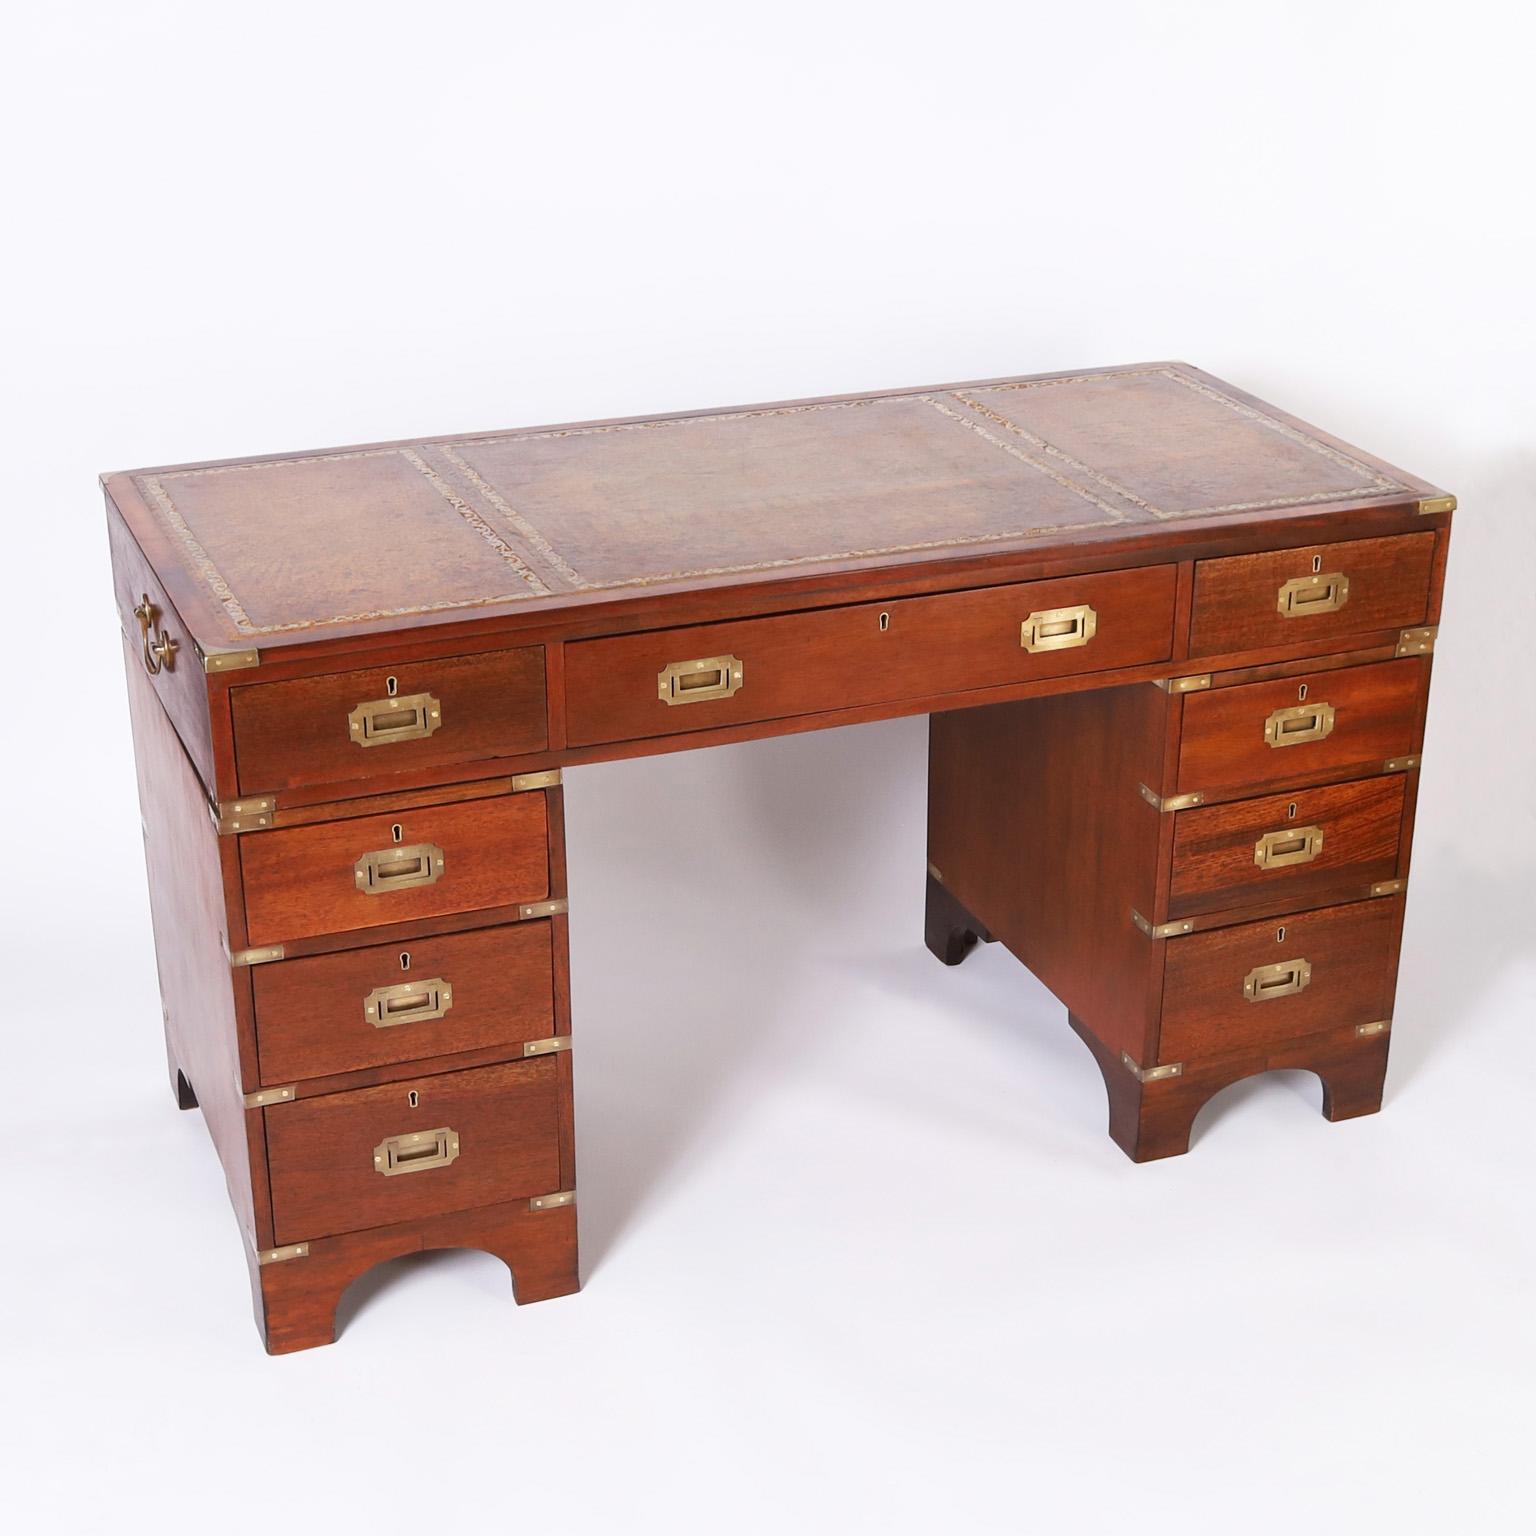 20th Century Antique English Campaign Leather Top Desk